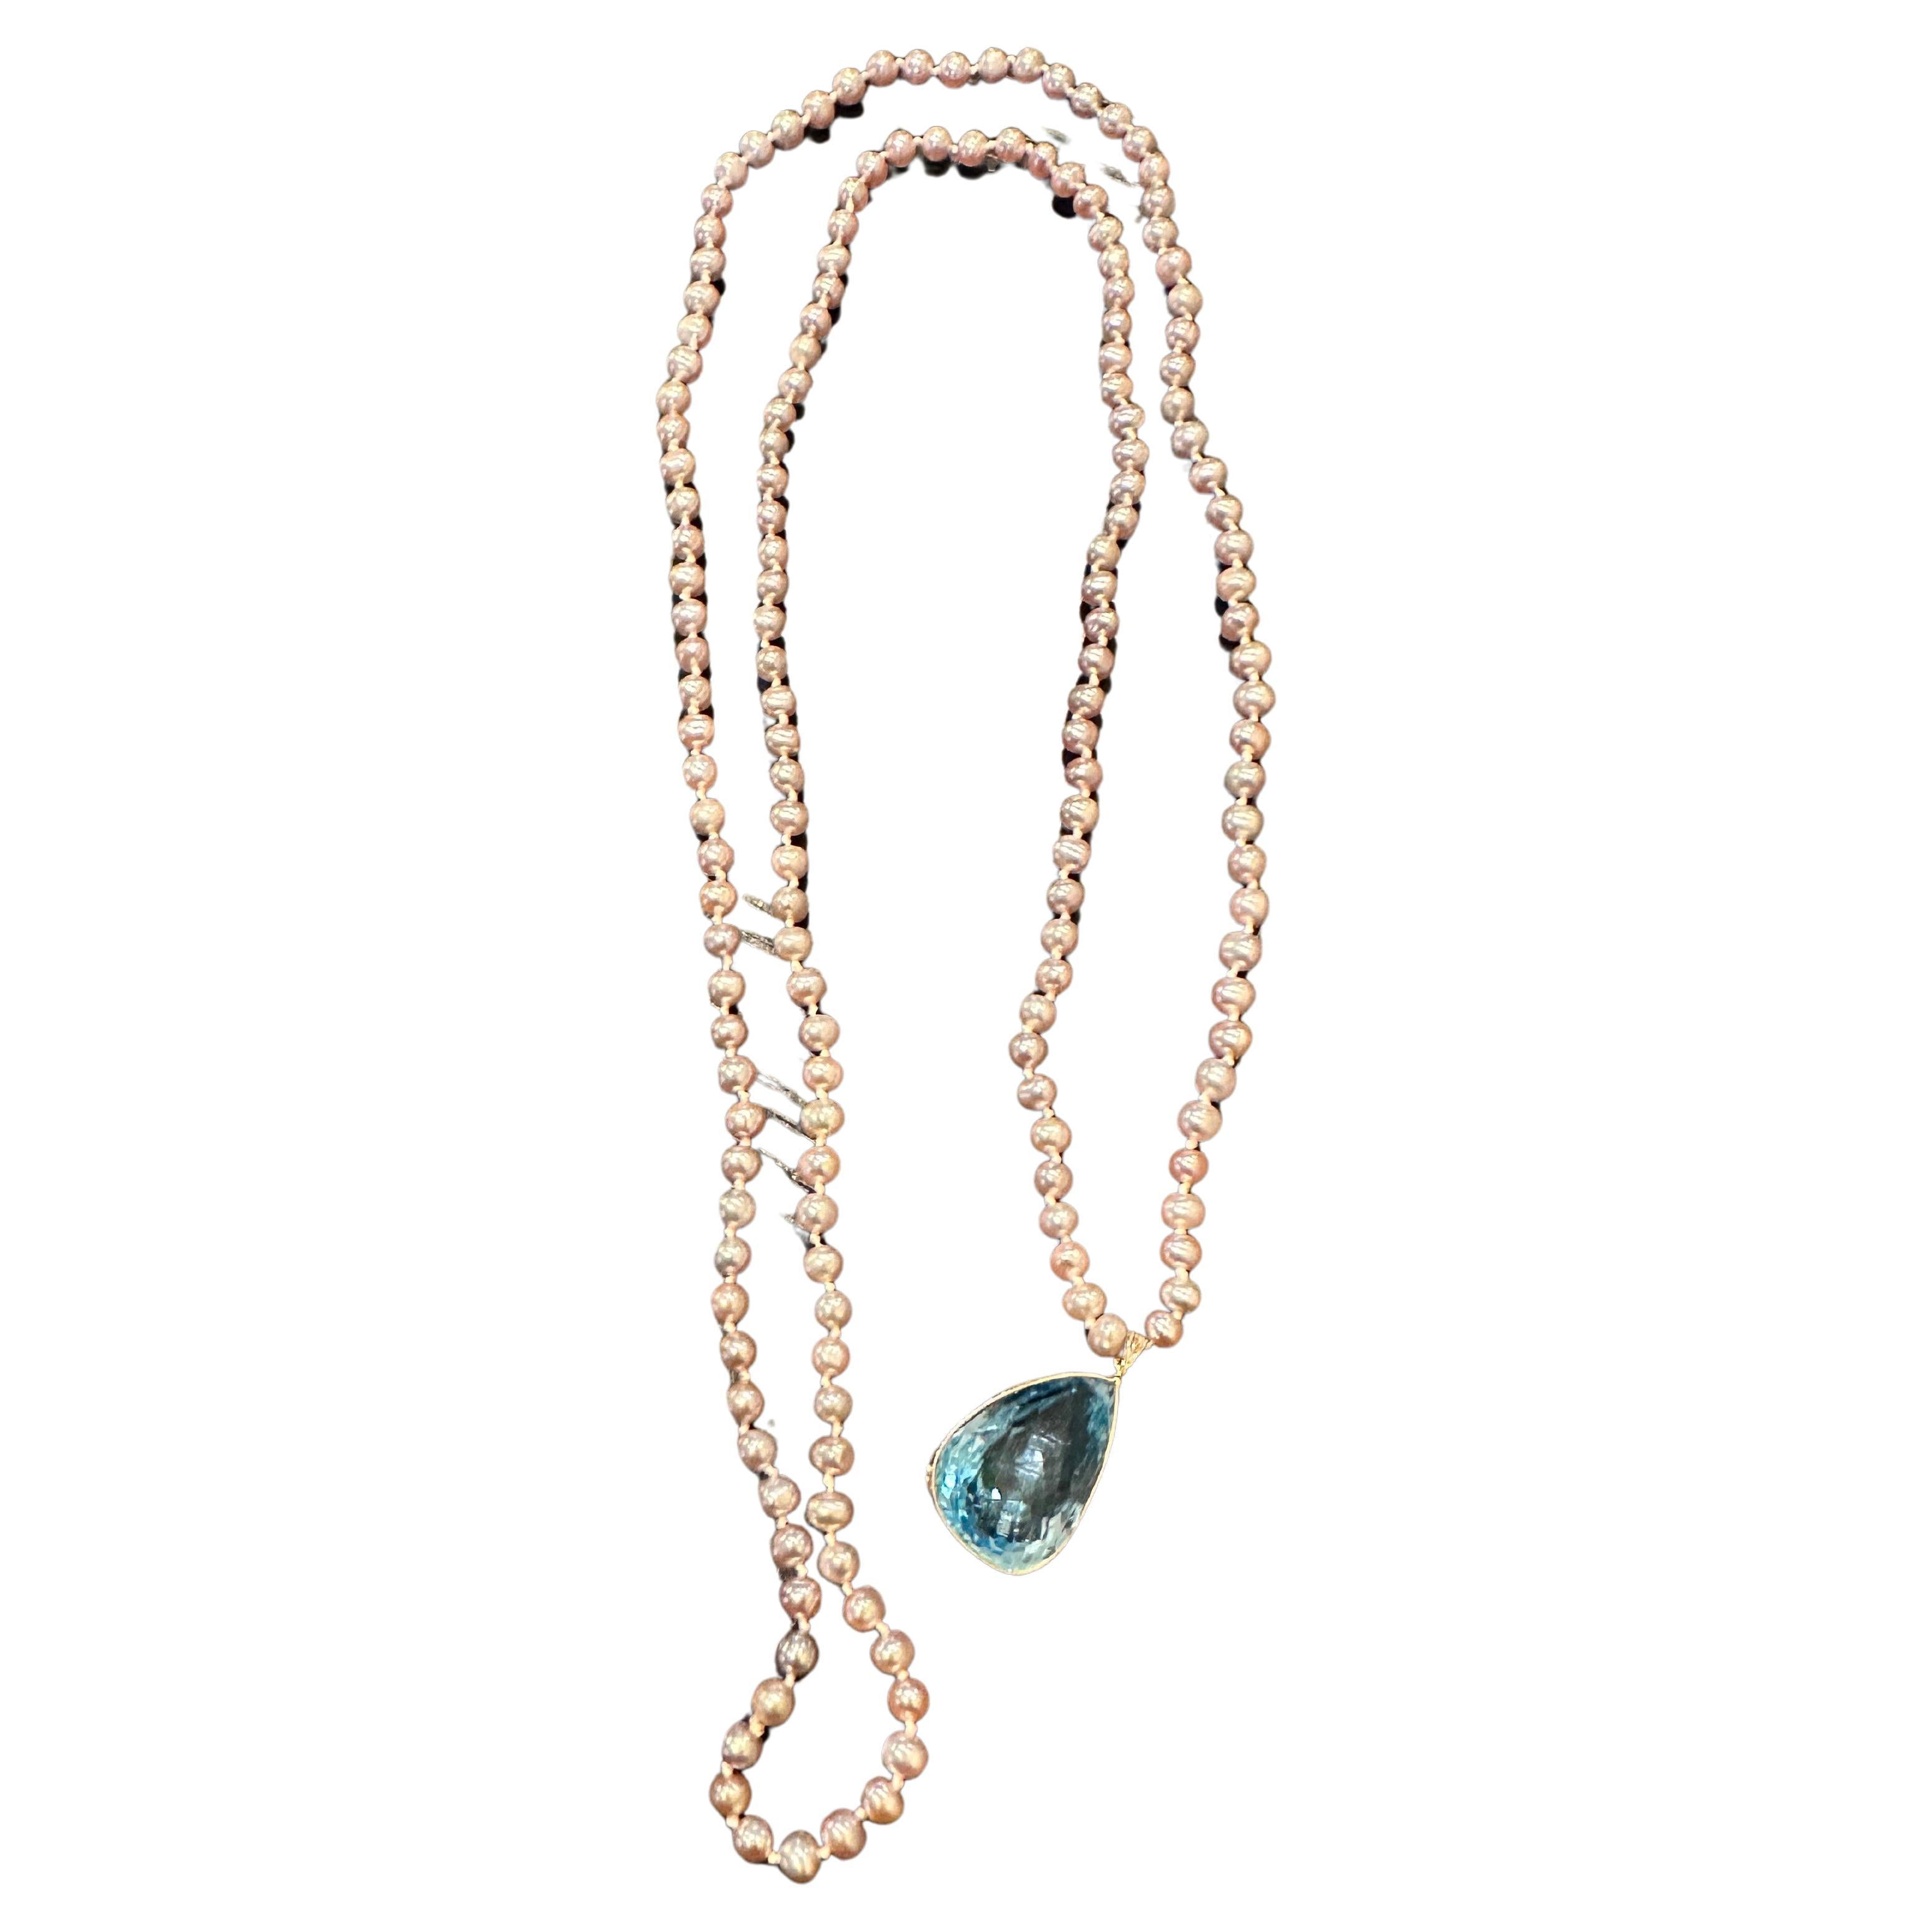 Exquisite Topaz necklace 14 Karat Gold pearl necklace 30ct HUGE pear topaz 30"  For Sale